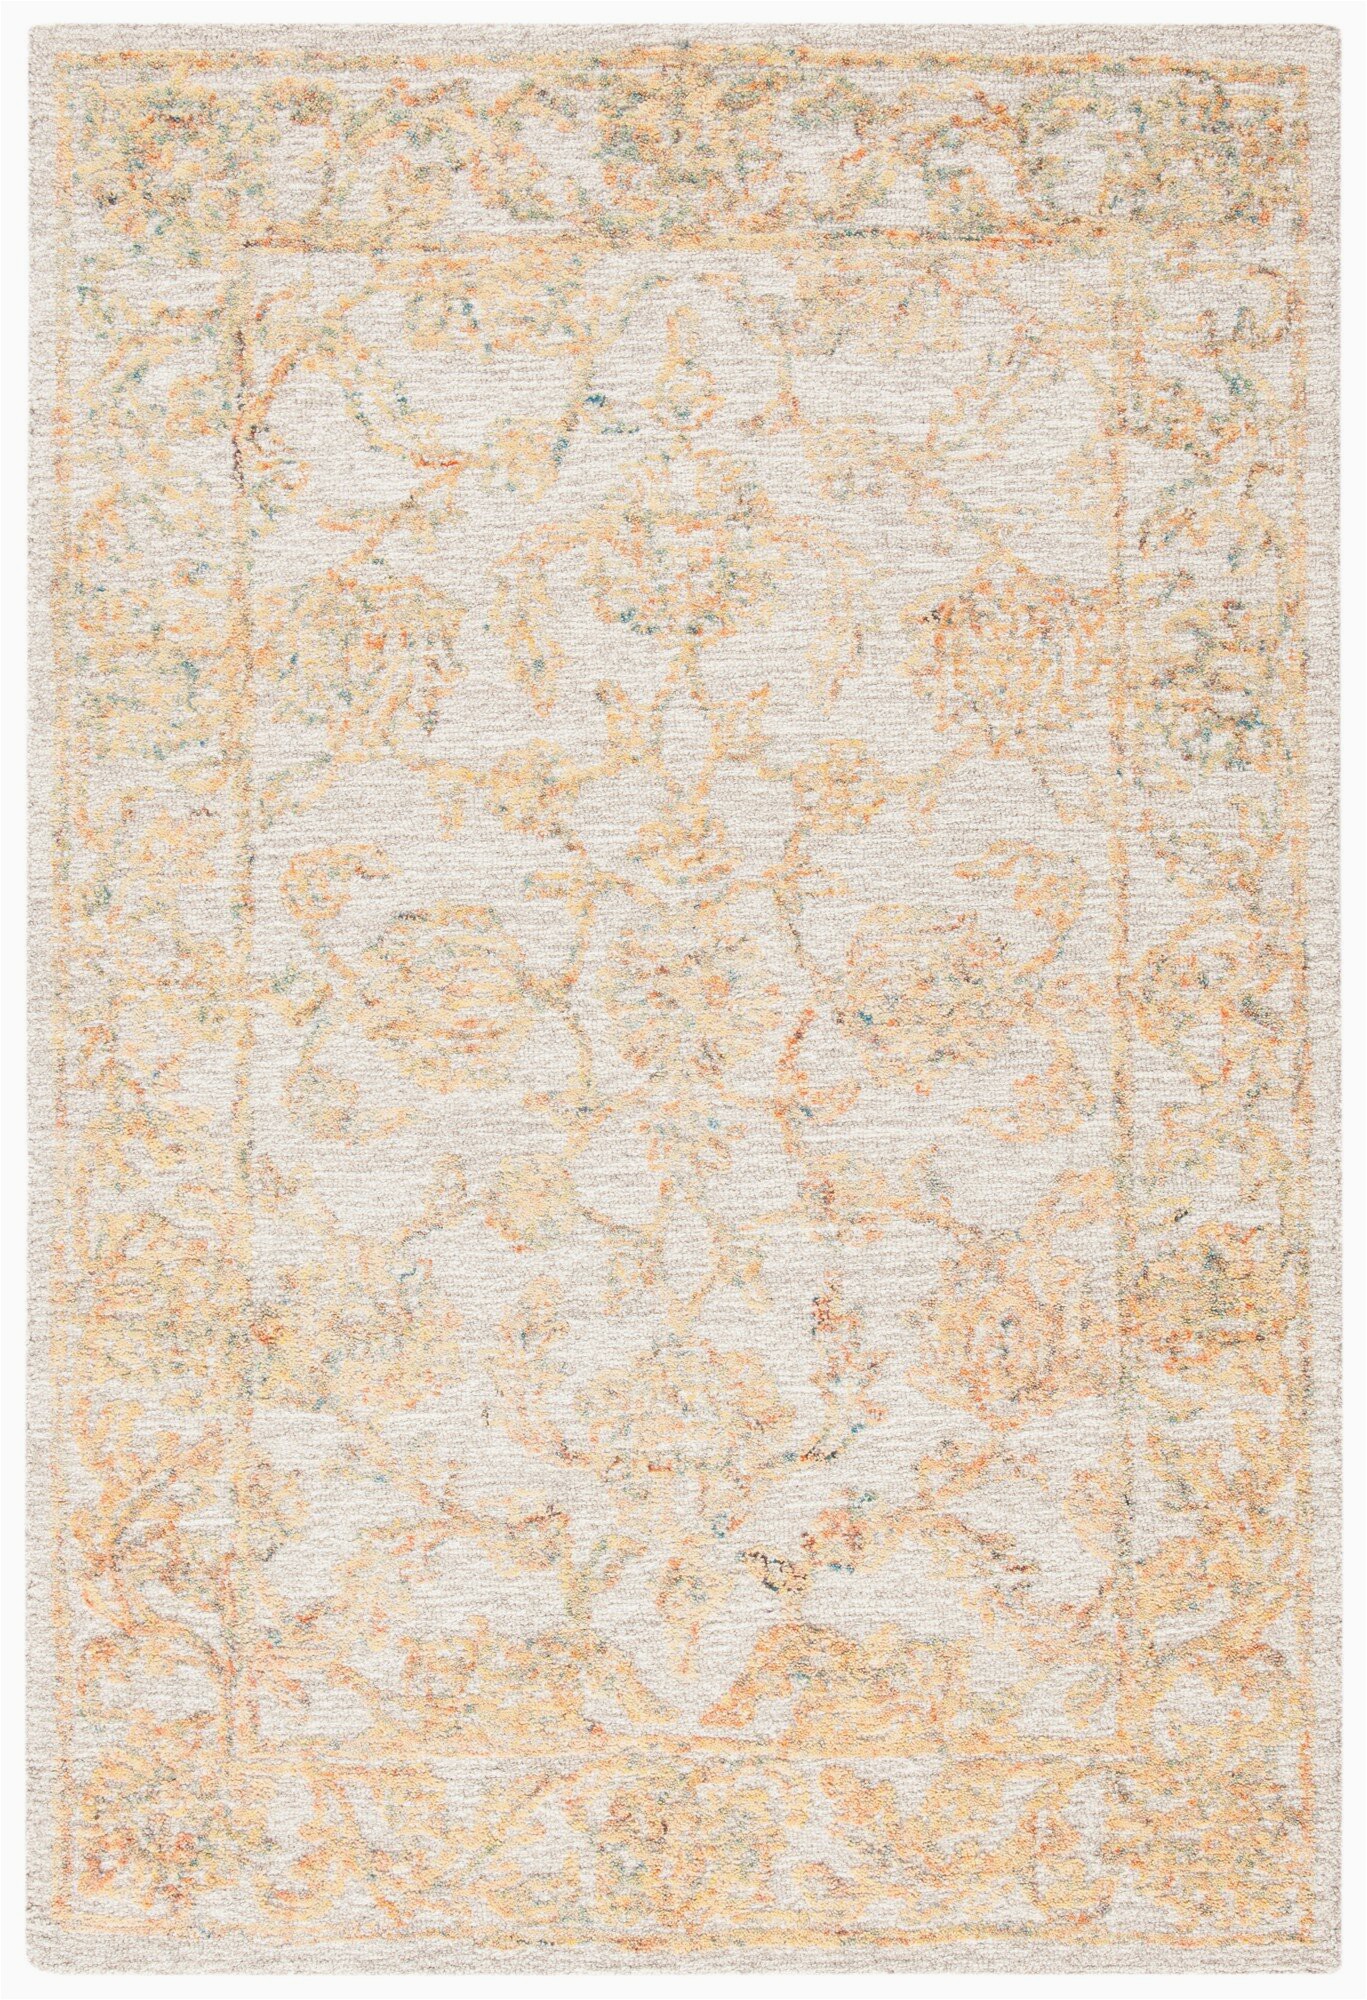 swarey oriental hand tufted wool beigegold area rug